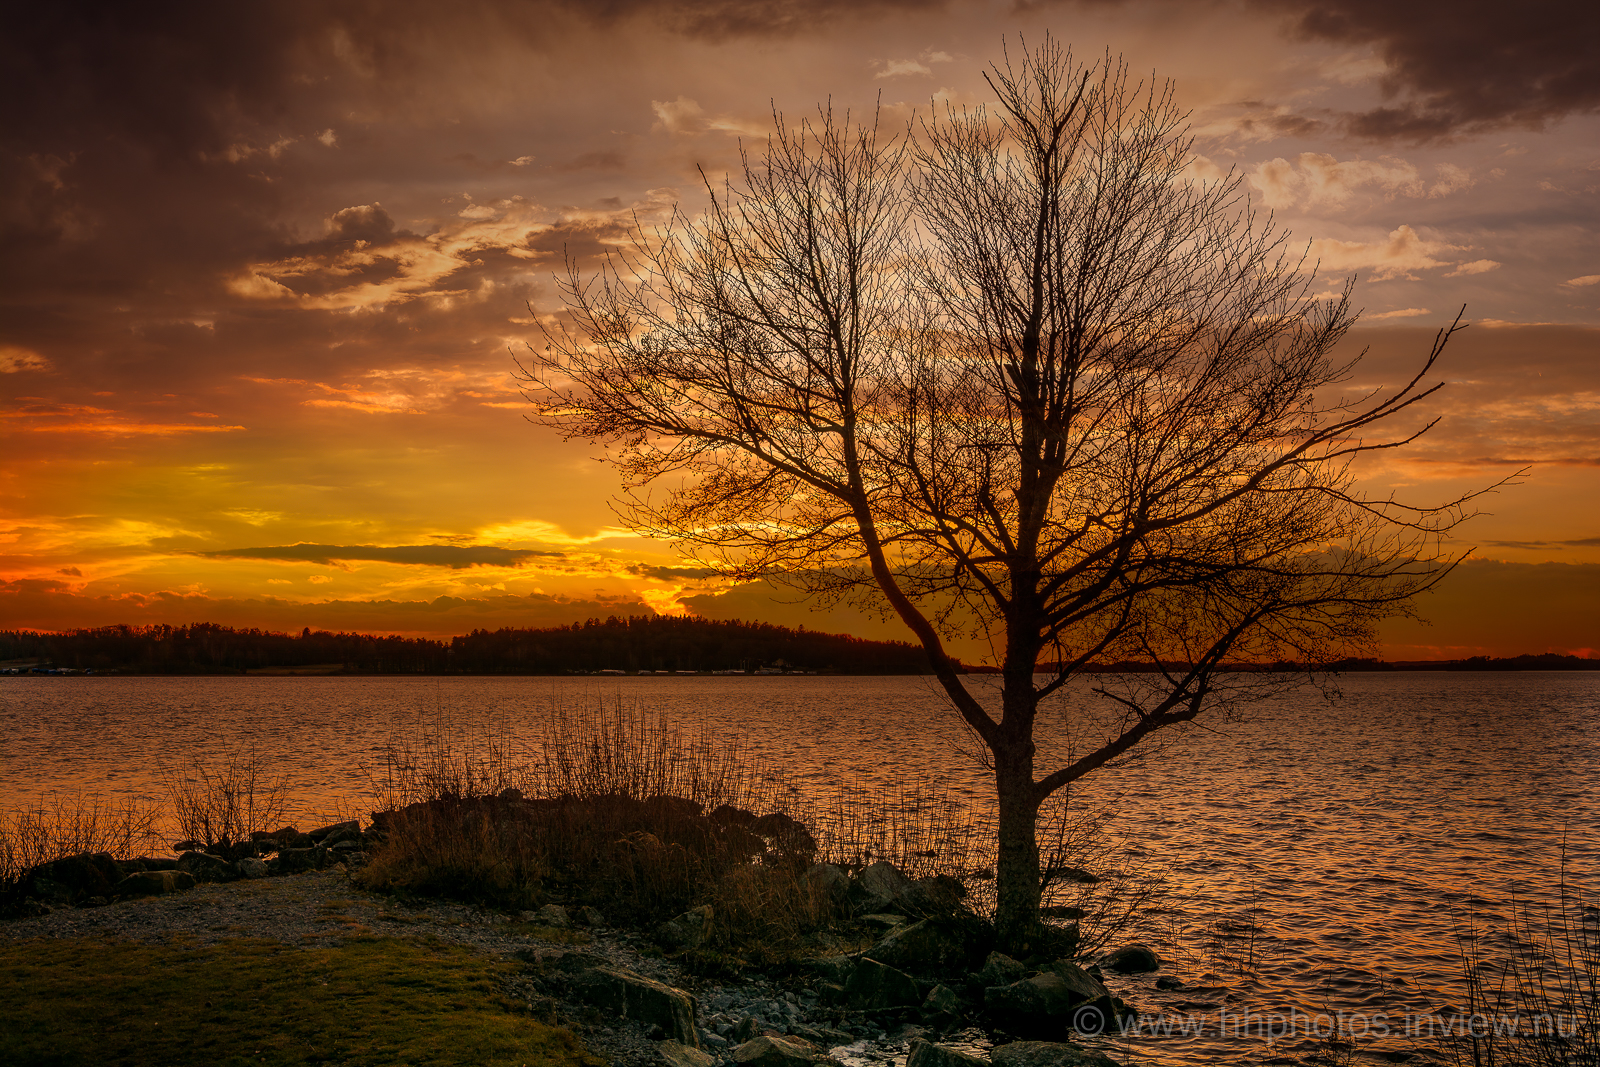 Sunset by Lake Mjörn, Alingsås